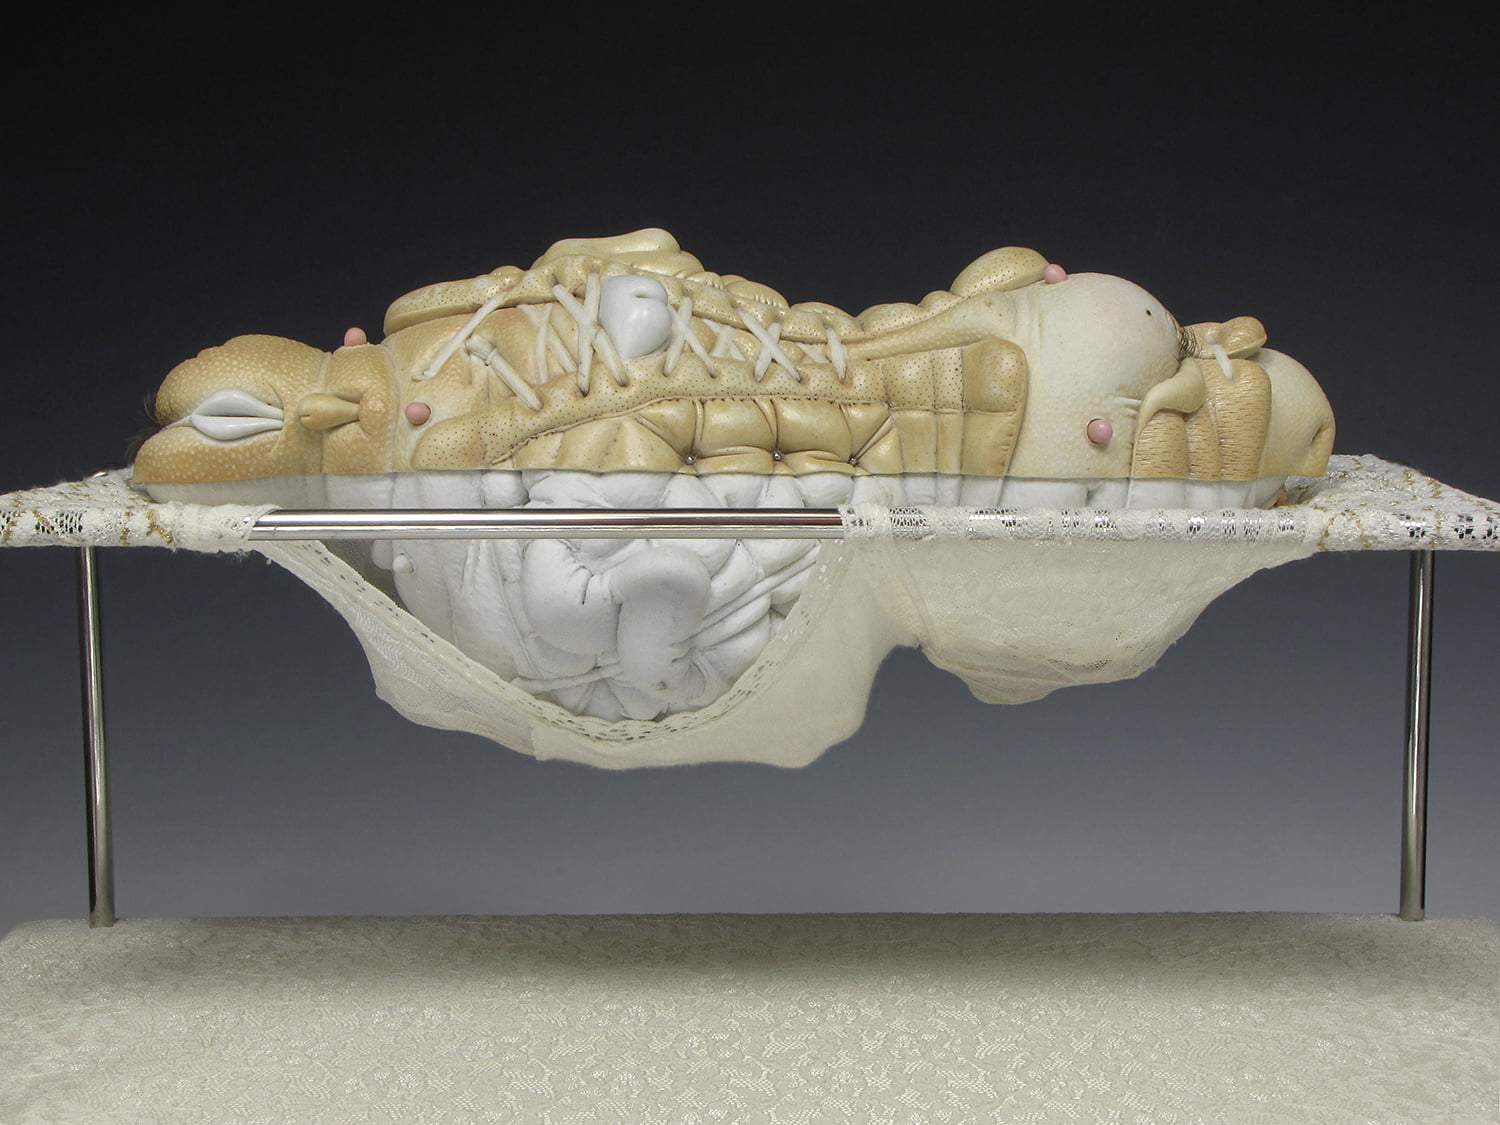 Jason Briggs "Peel". Porcelain, hair, and mixed media sculptural ceramic art.